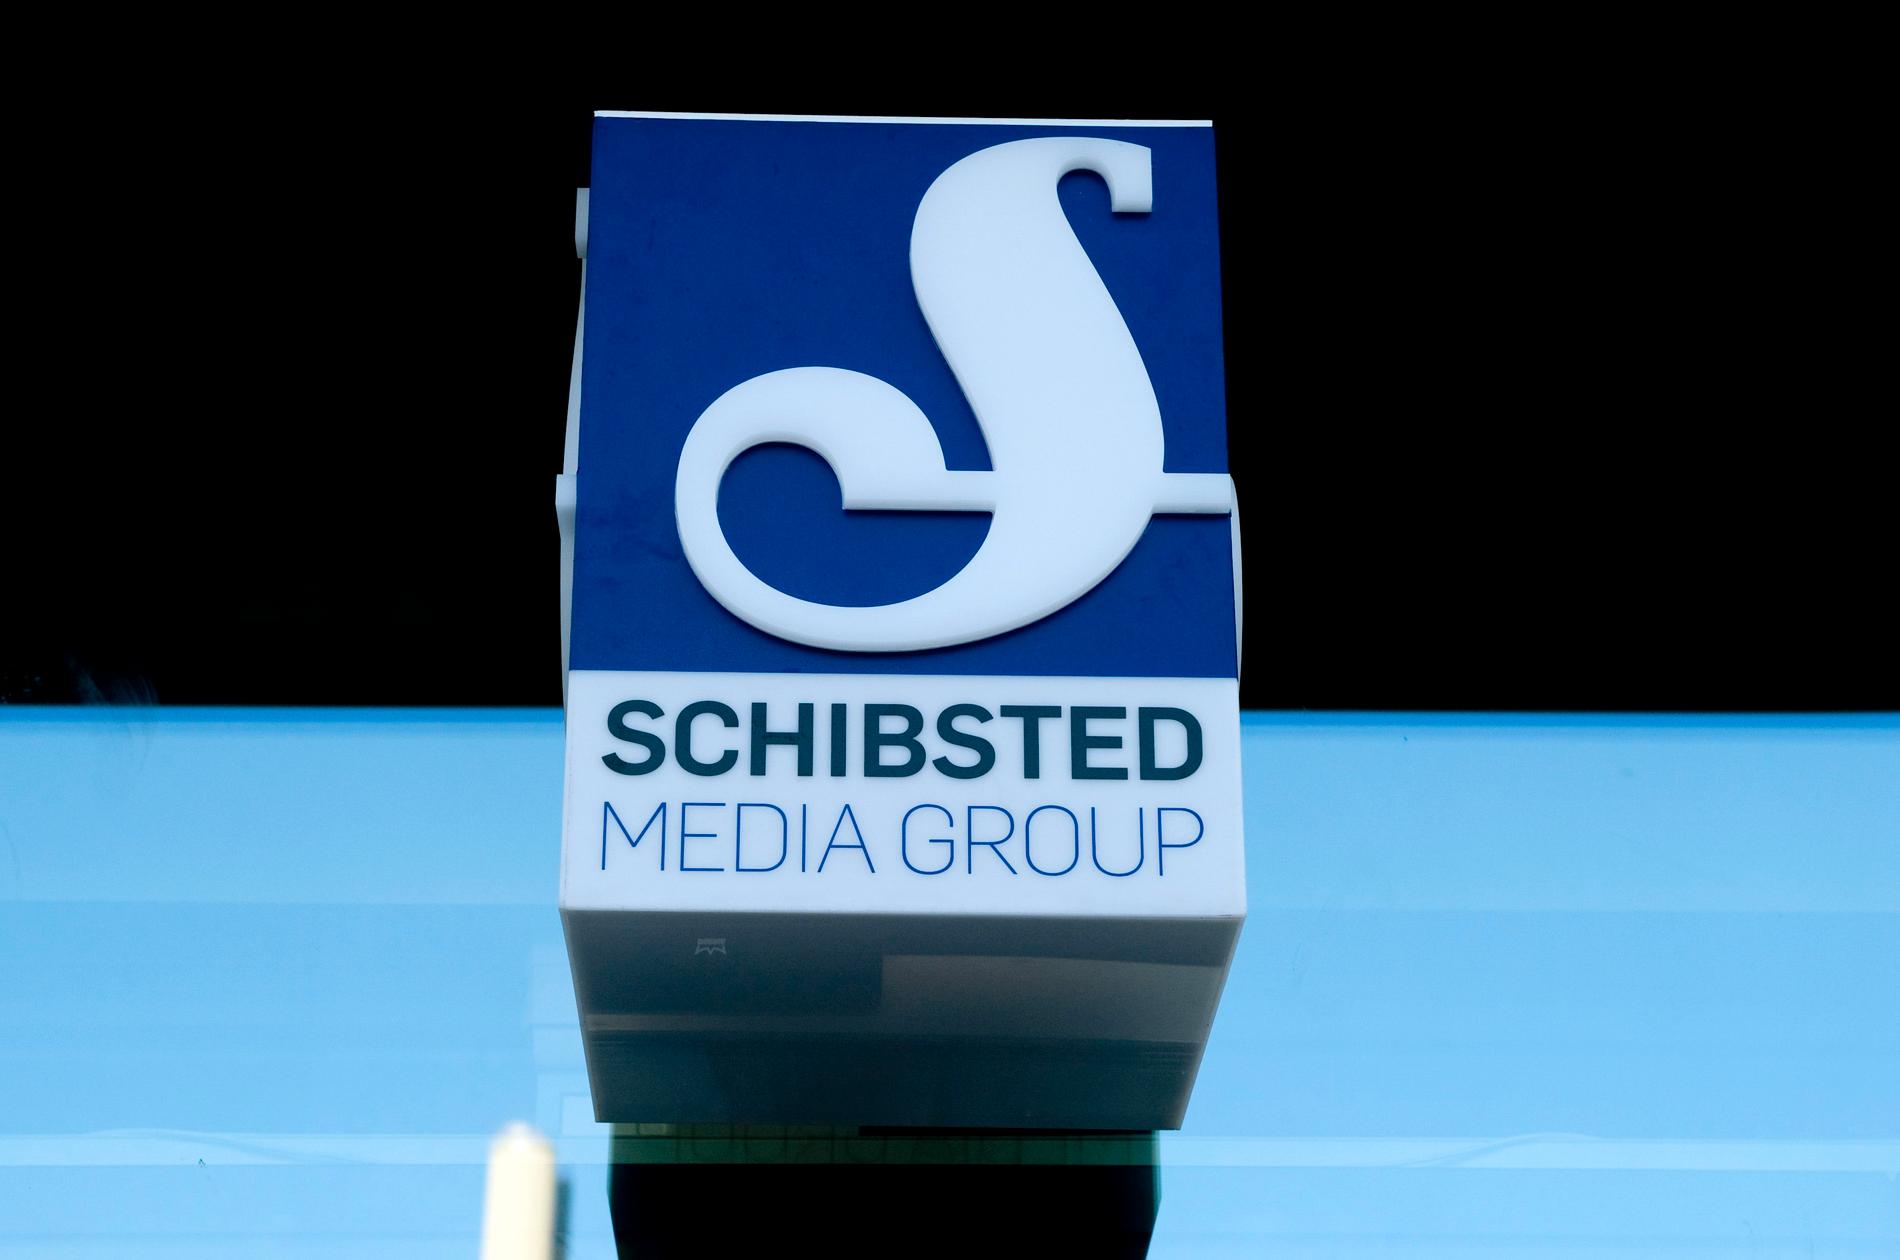 Schibsted lanserar ett stort sparpaket som bland annat drabbar Aftonbladet hårt. Arkivbild.